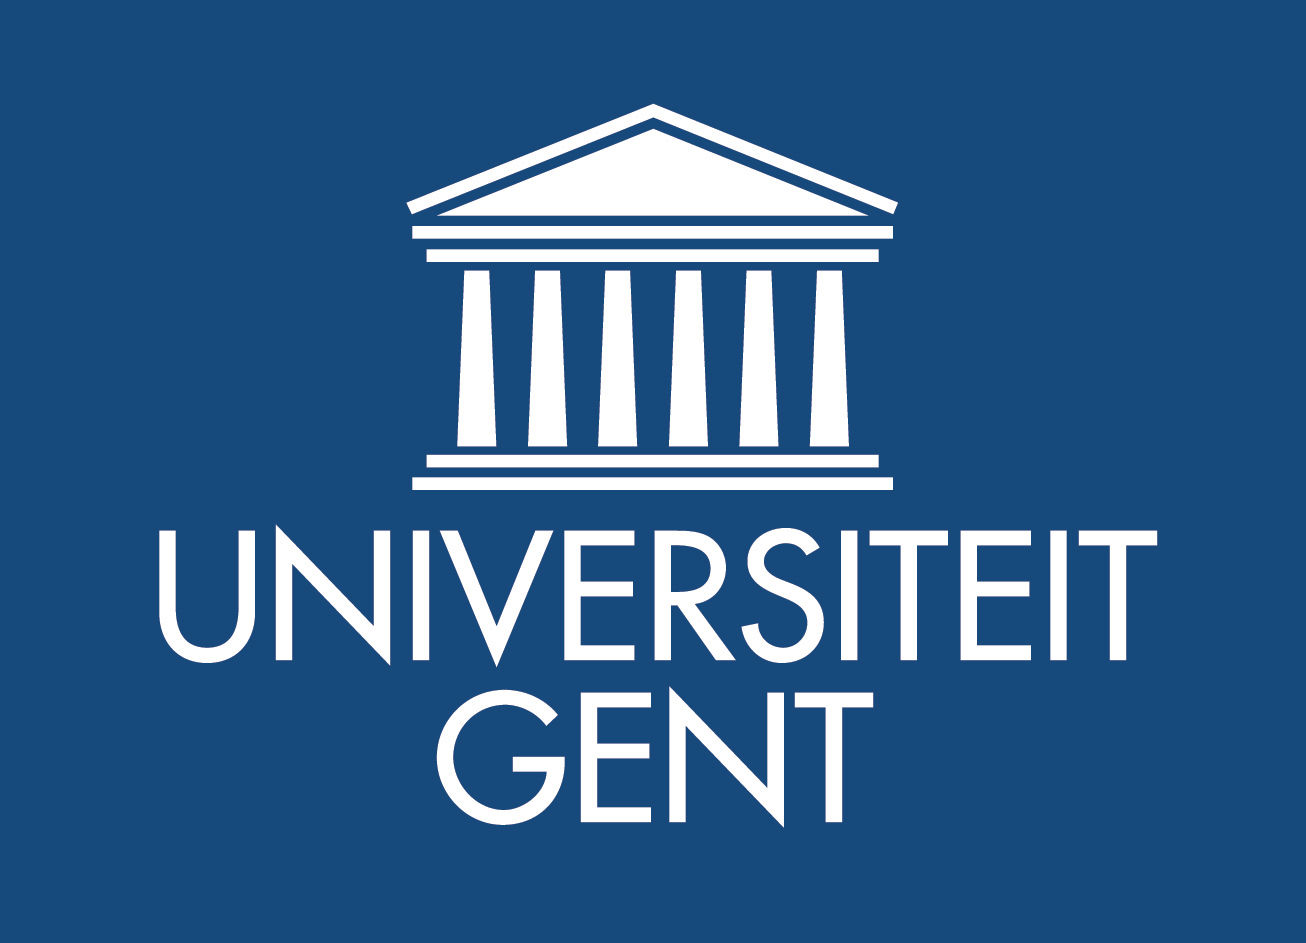 ghent university logo 05